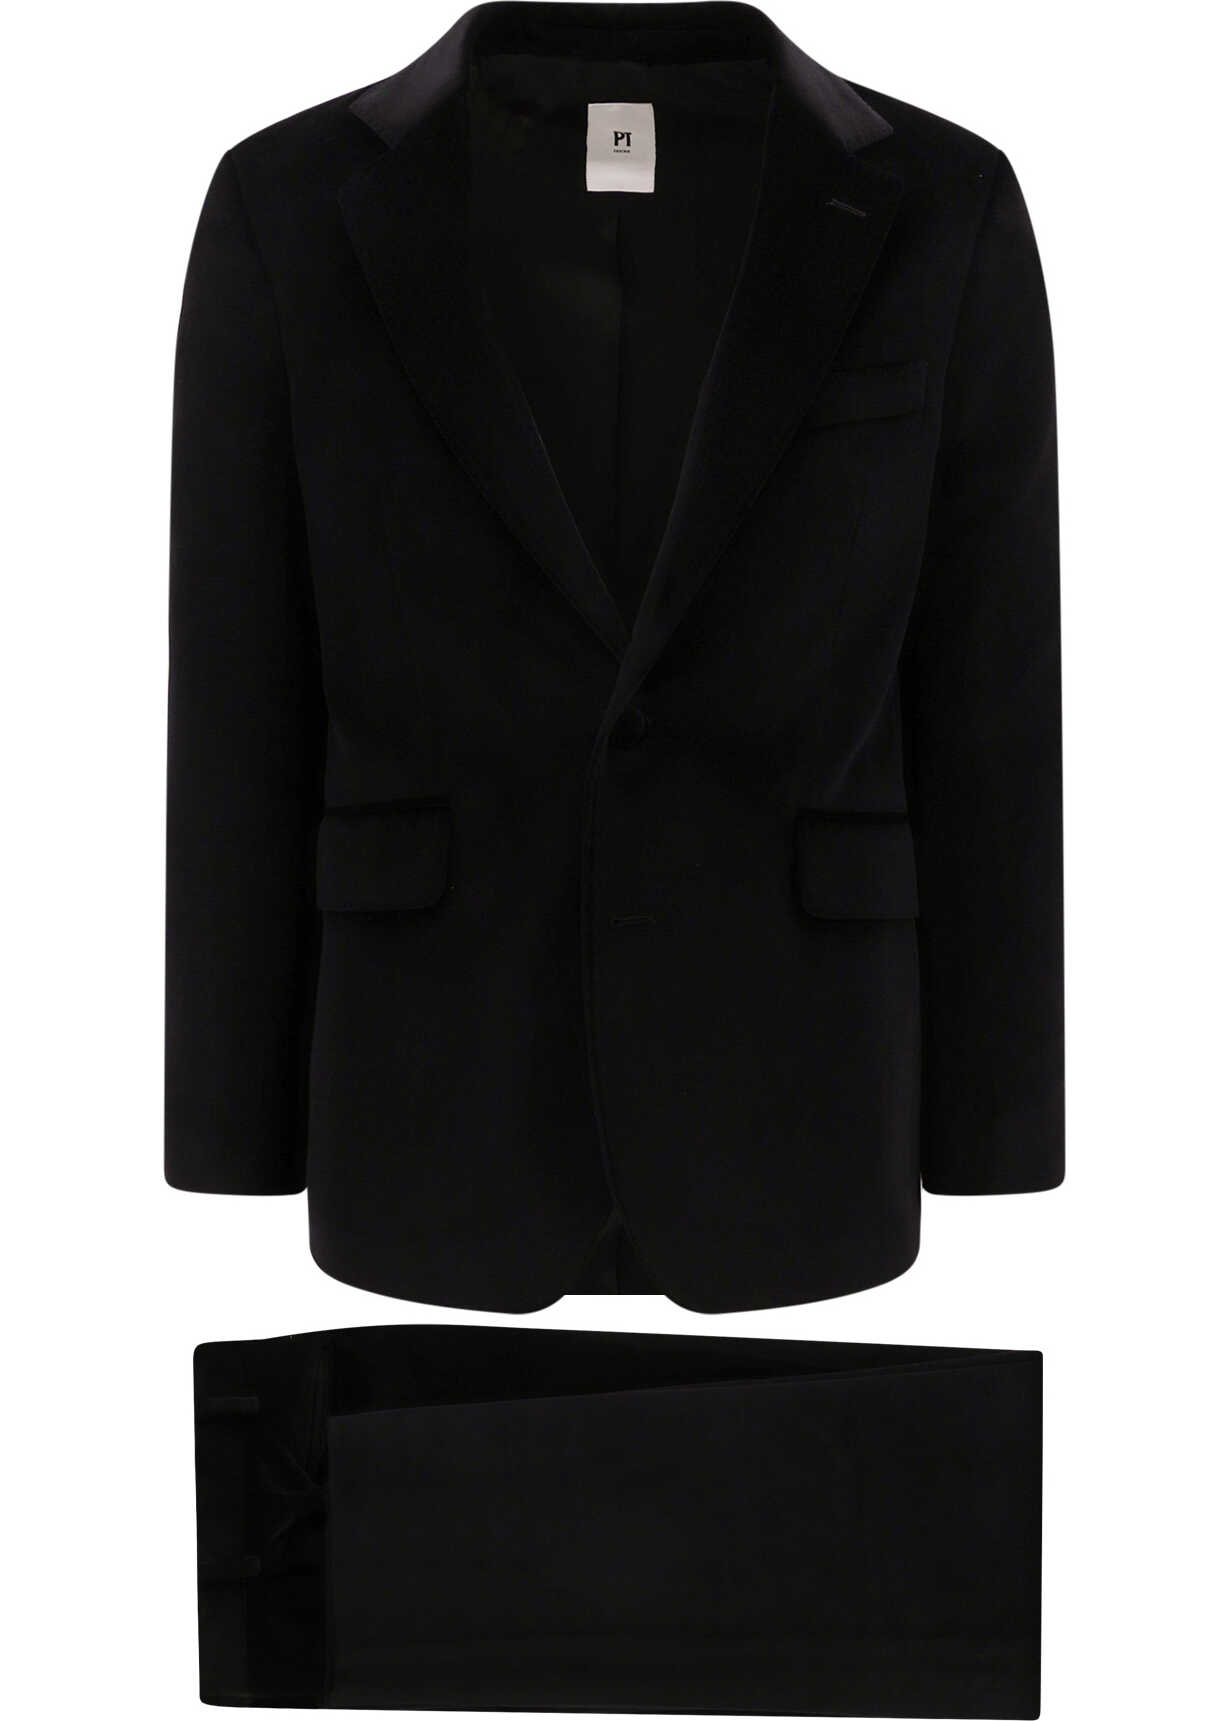 PT TORINO Suit Black b-mall.ro